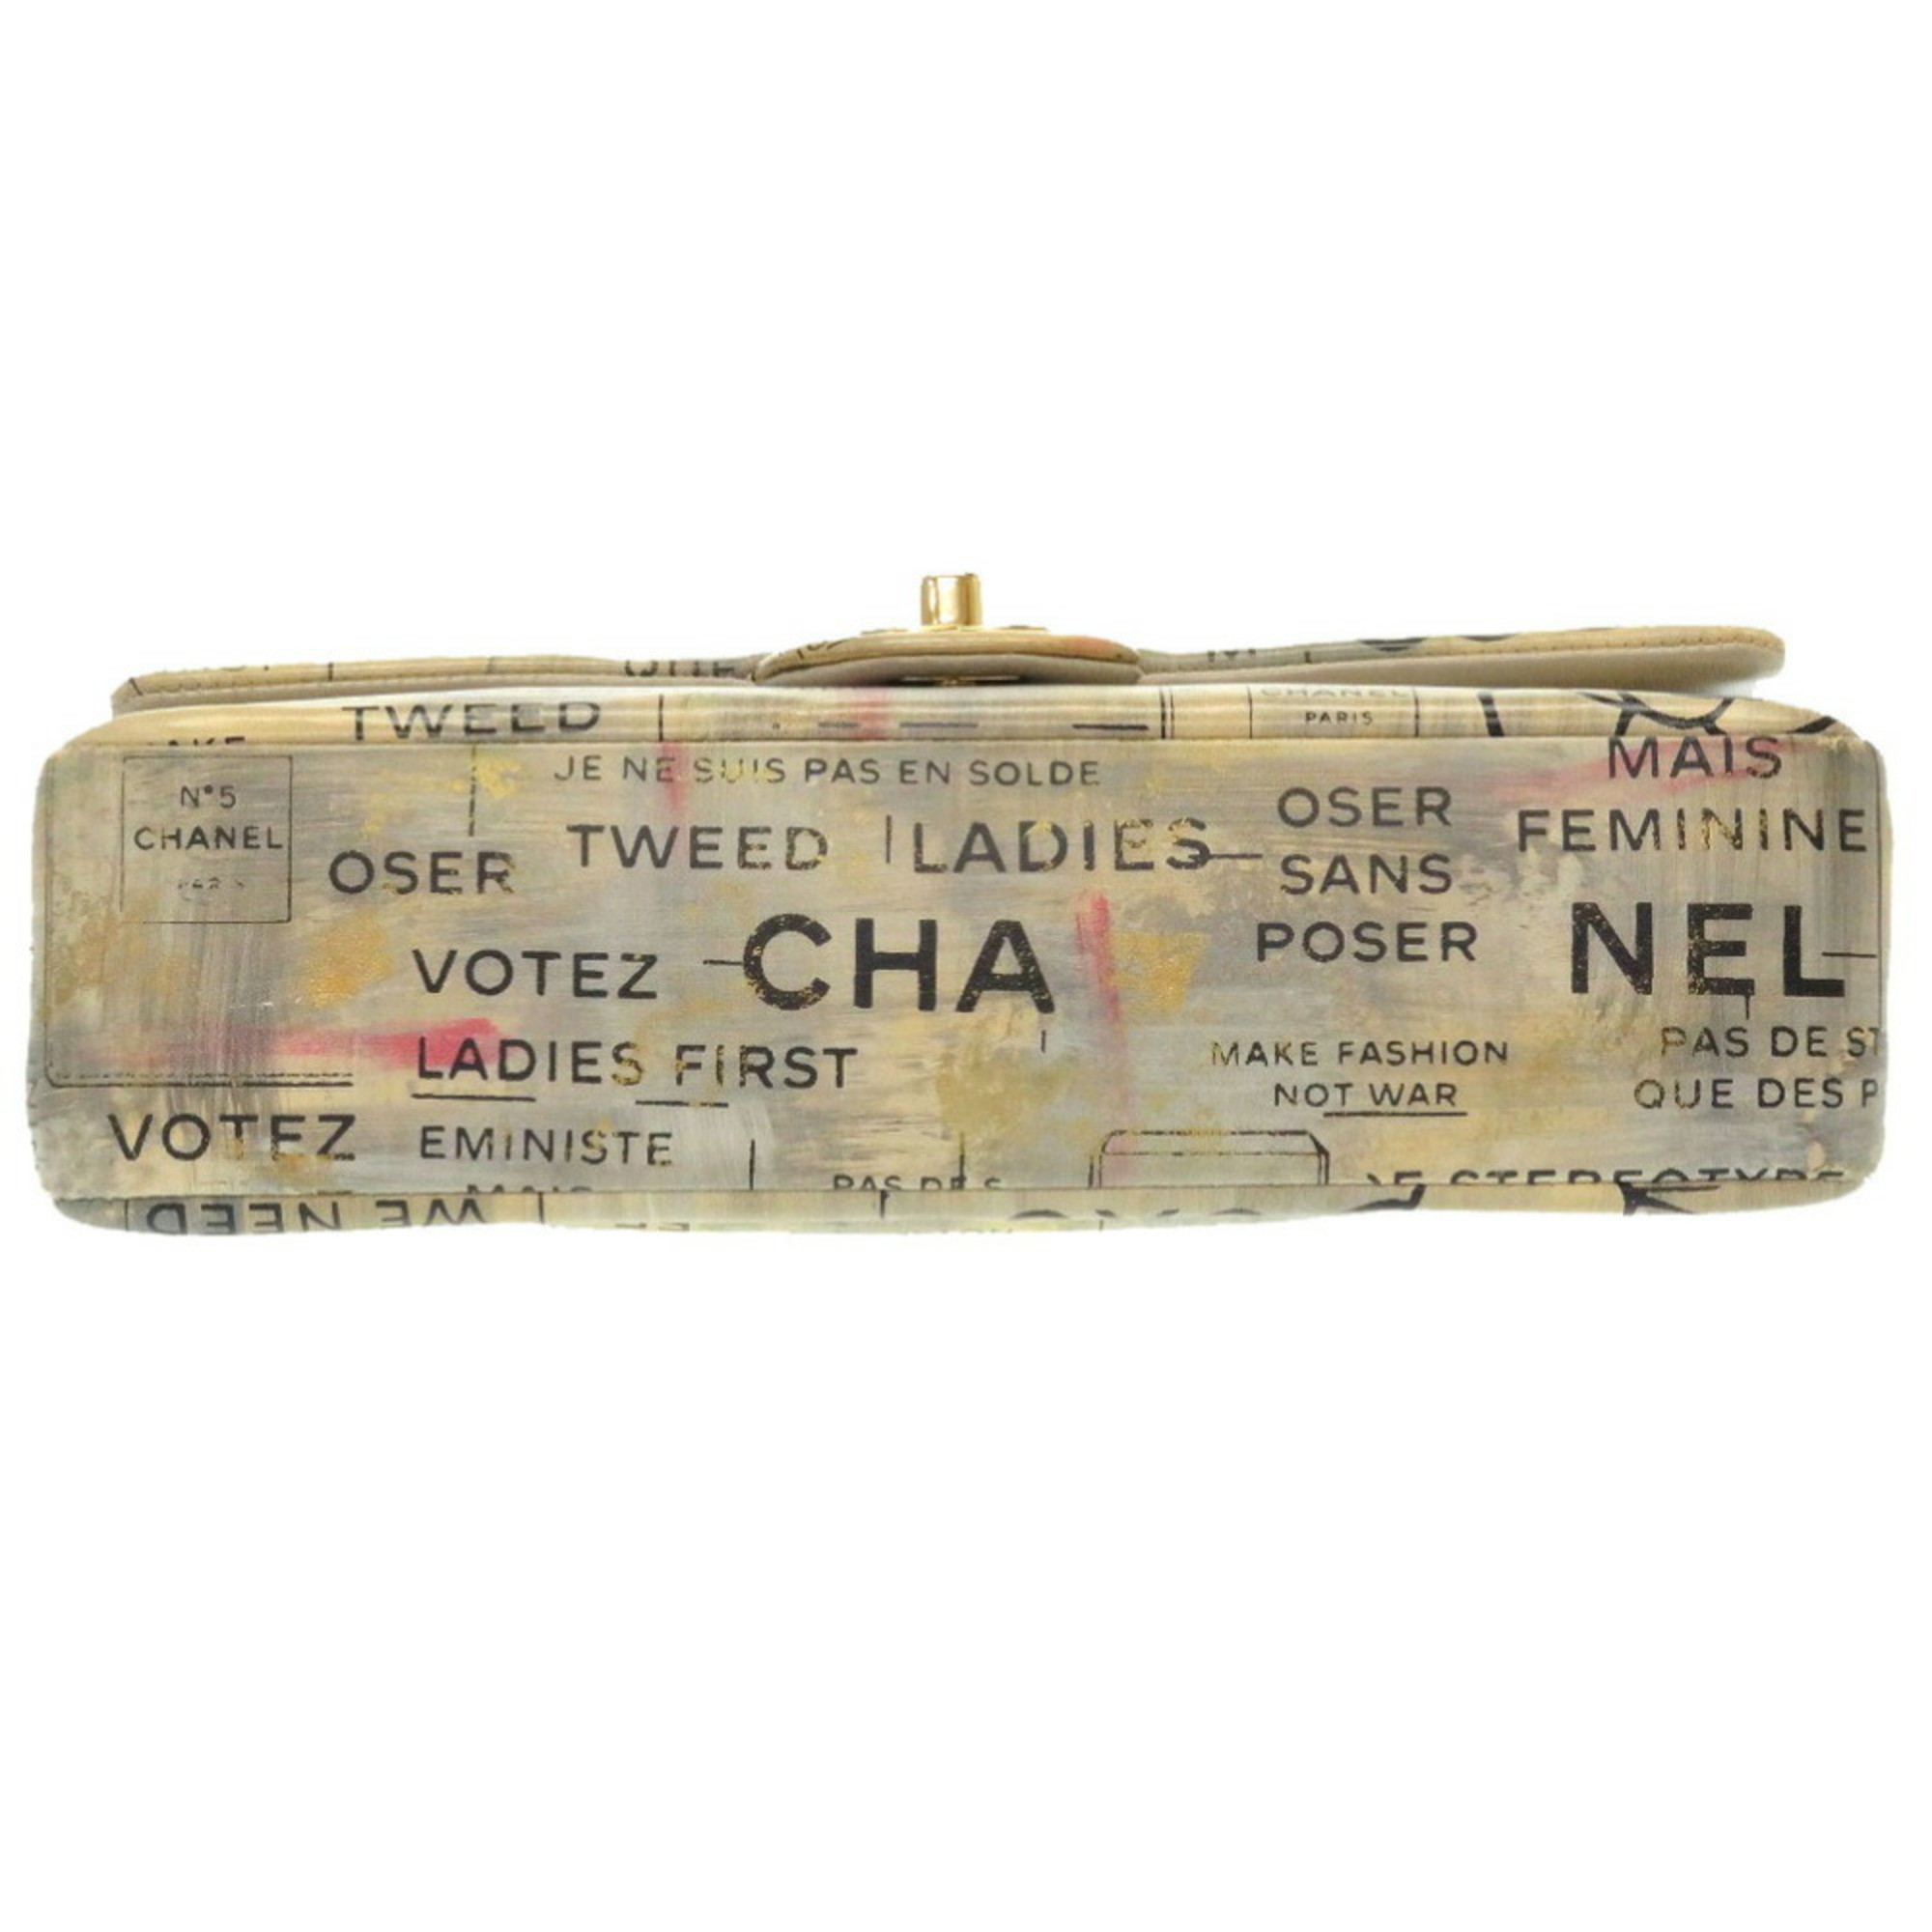 Chanel Matelasse 25 Double Flap Beige Gold Chain Shoulder Bag Leather 2 Coco Mark CC Lid 0021 CHANEL